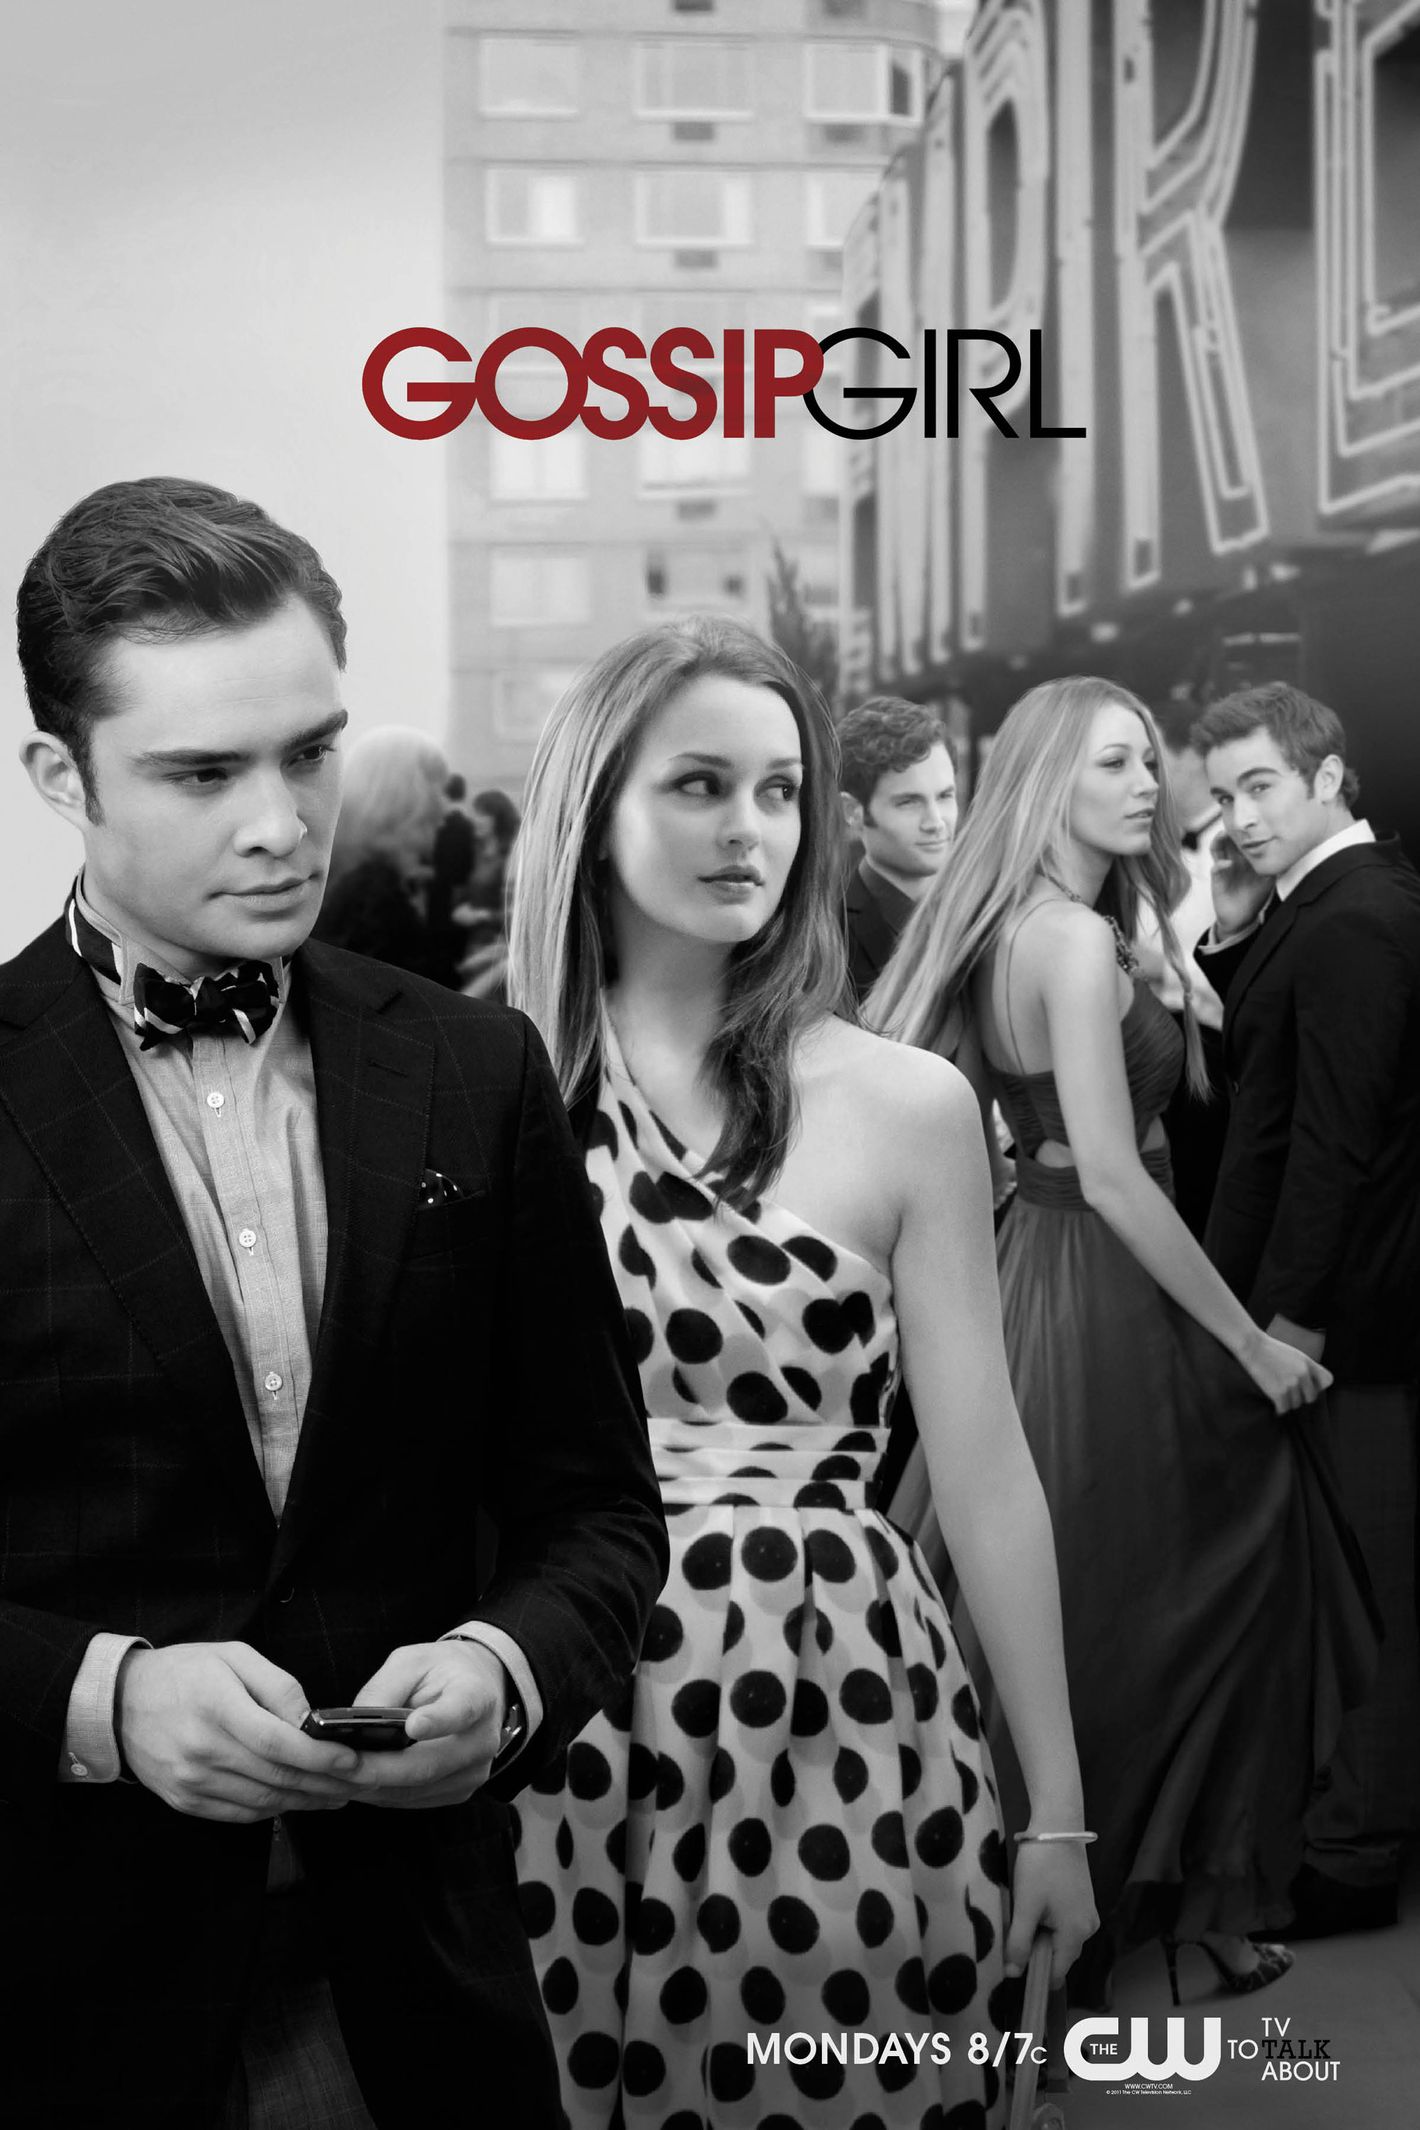 Hbo Gossip Girl Poster Wallpapers